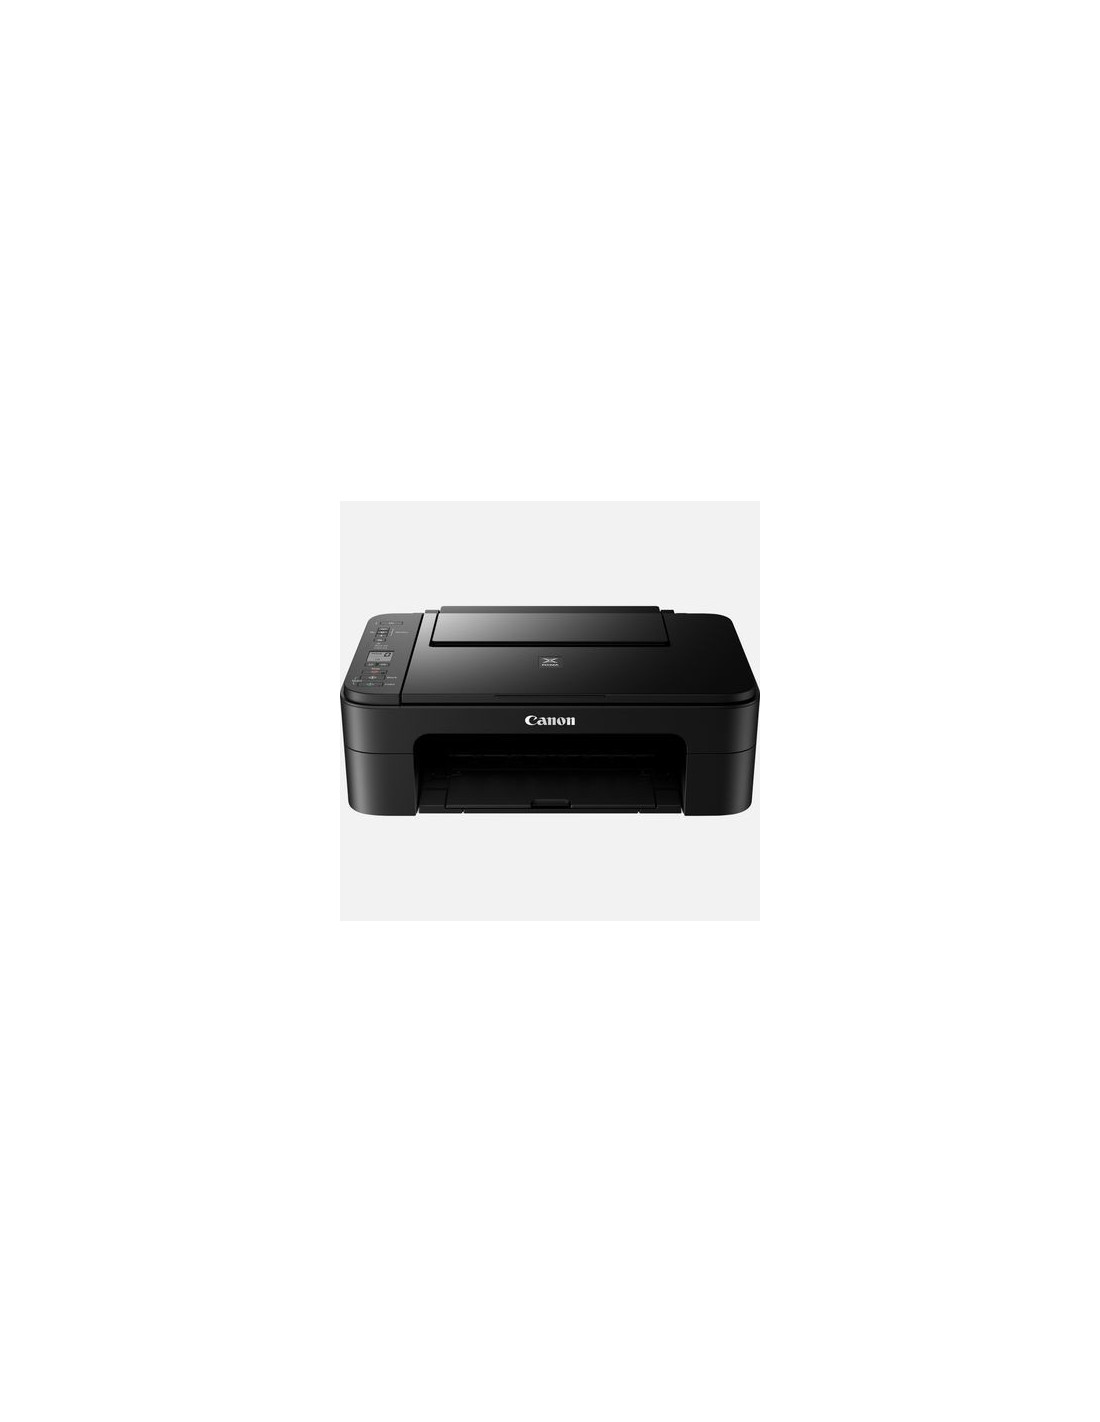  Monochrome Printer Multifunction Canon Pixma TS3350 7,7 ipm  WiFi Black : Productos de Oficina